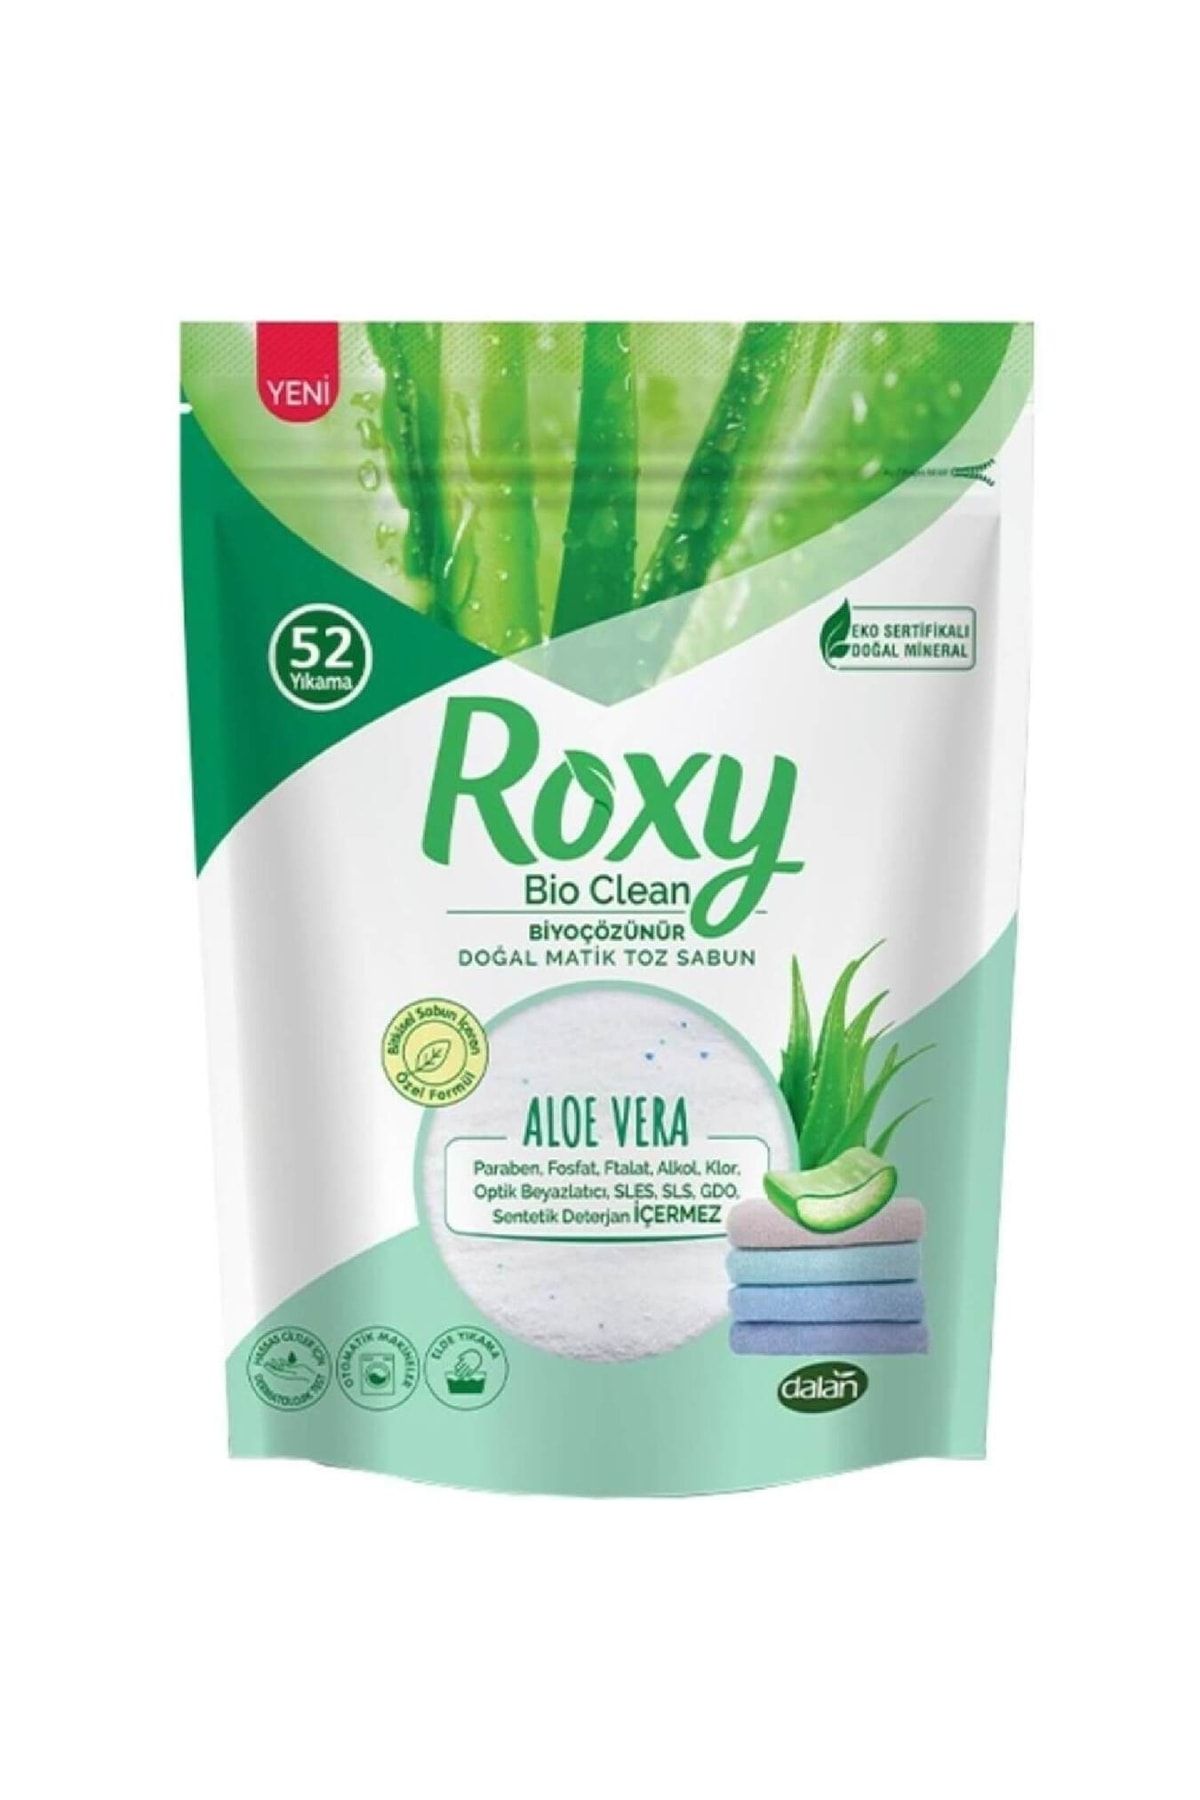 Dalan Roxy Bio Clean Doğal Matik Toz Sabun Aloe Vera 1600 Gr